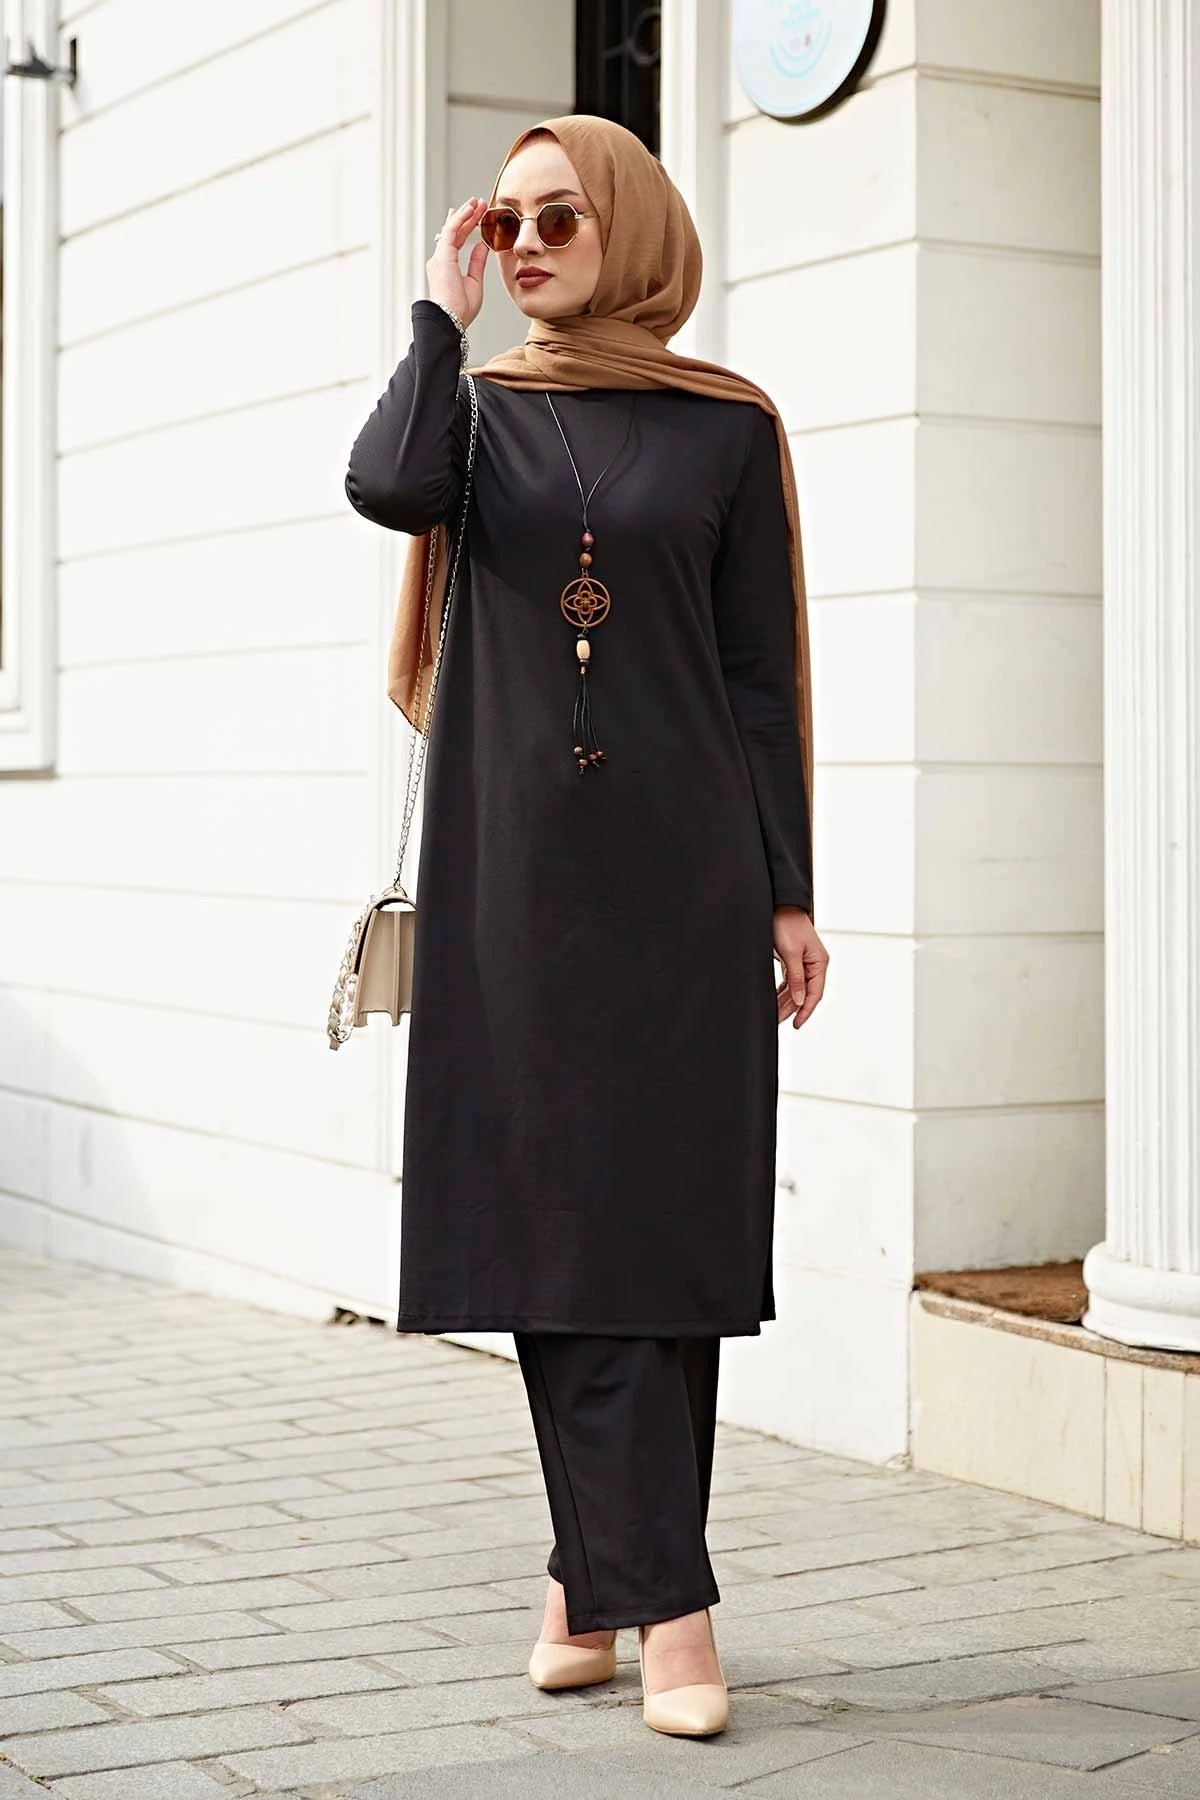 Women's Dual Suit Kombin Bottom Top Muslim dress hijab Muslim üstleri women suit 2021 abayas abaya